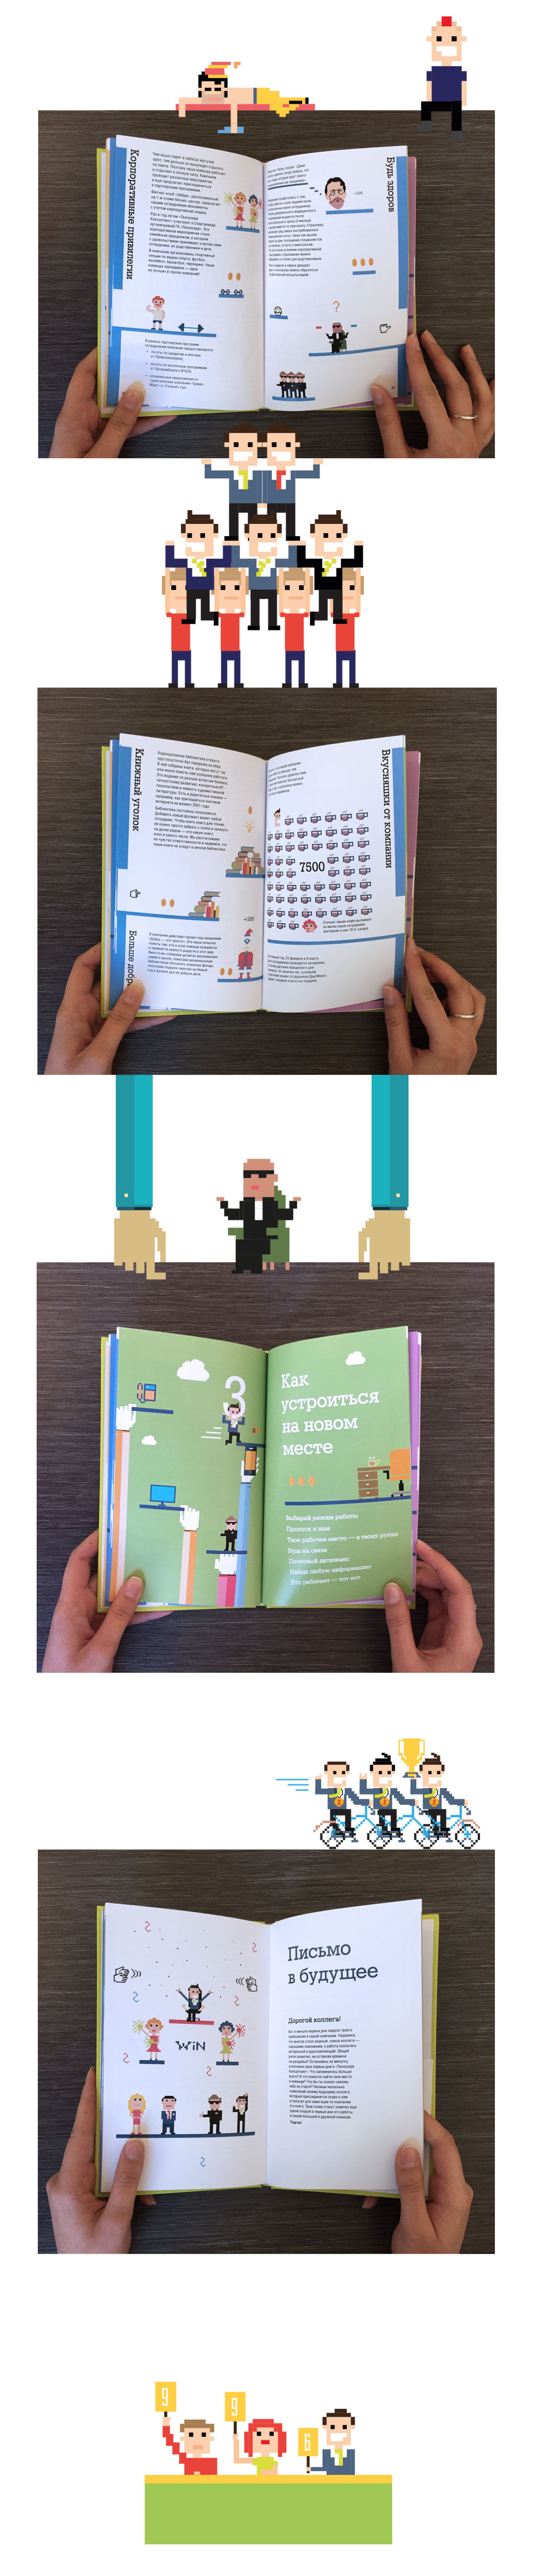 Guide corporate recruit Technoserv Consulting book Corporate Book корпоративный книга инструкция manual Техносерв Консалтинг верстка pixel Pixel Illustration пиксельная графика